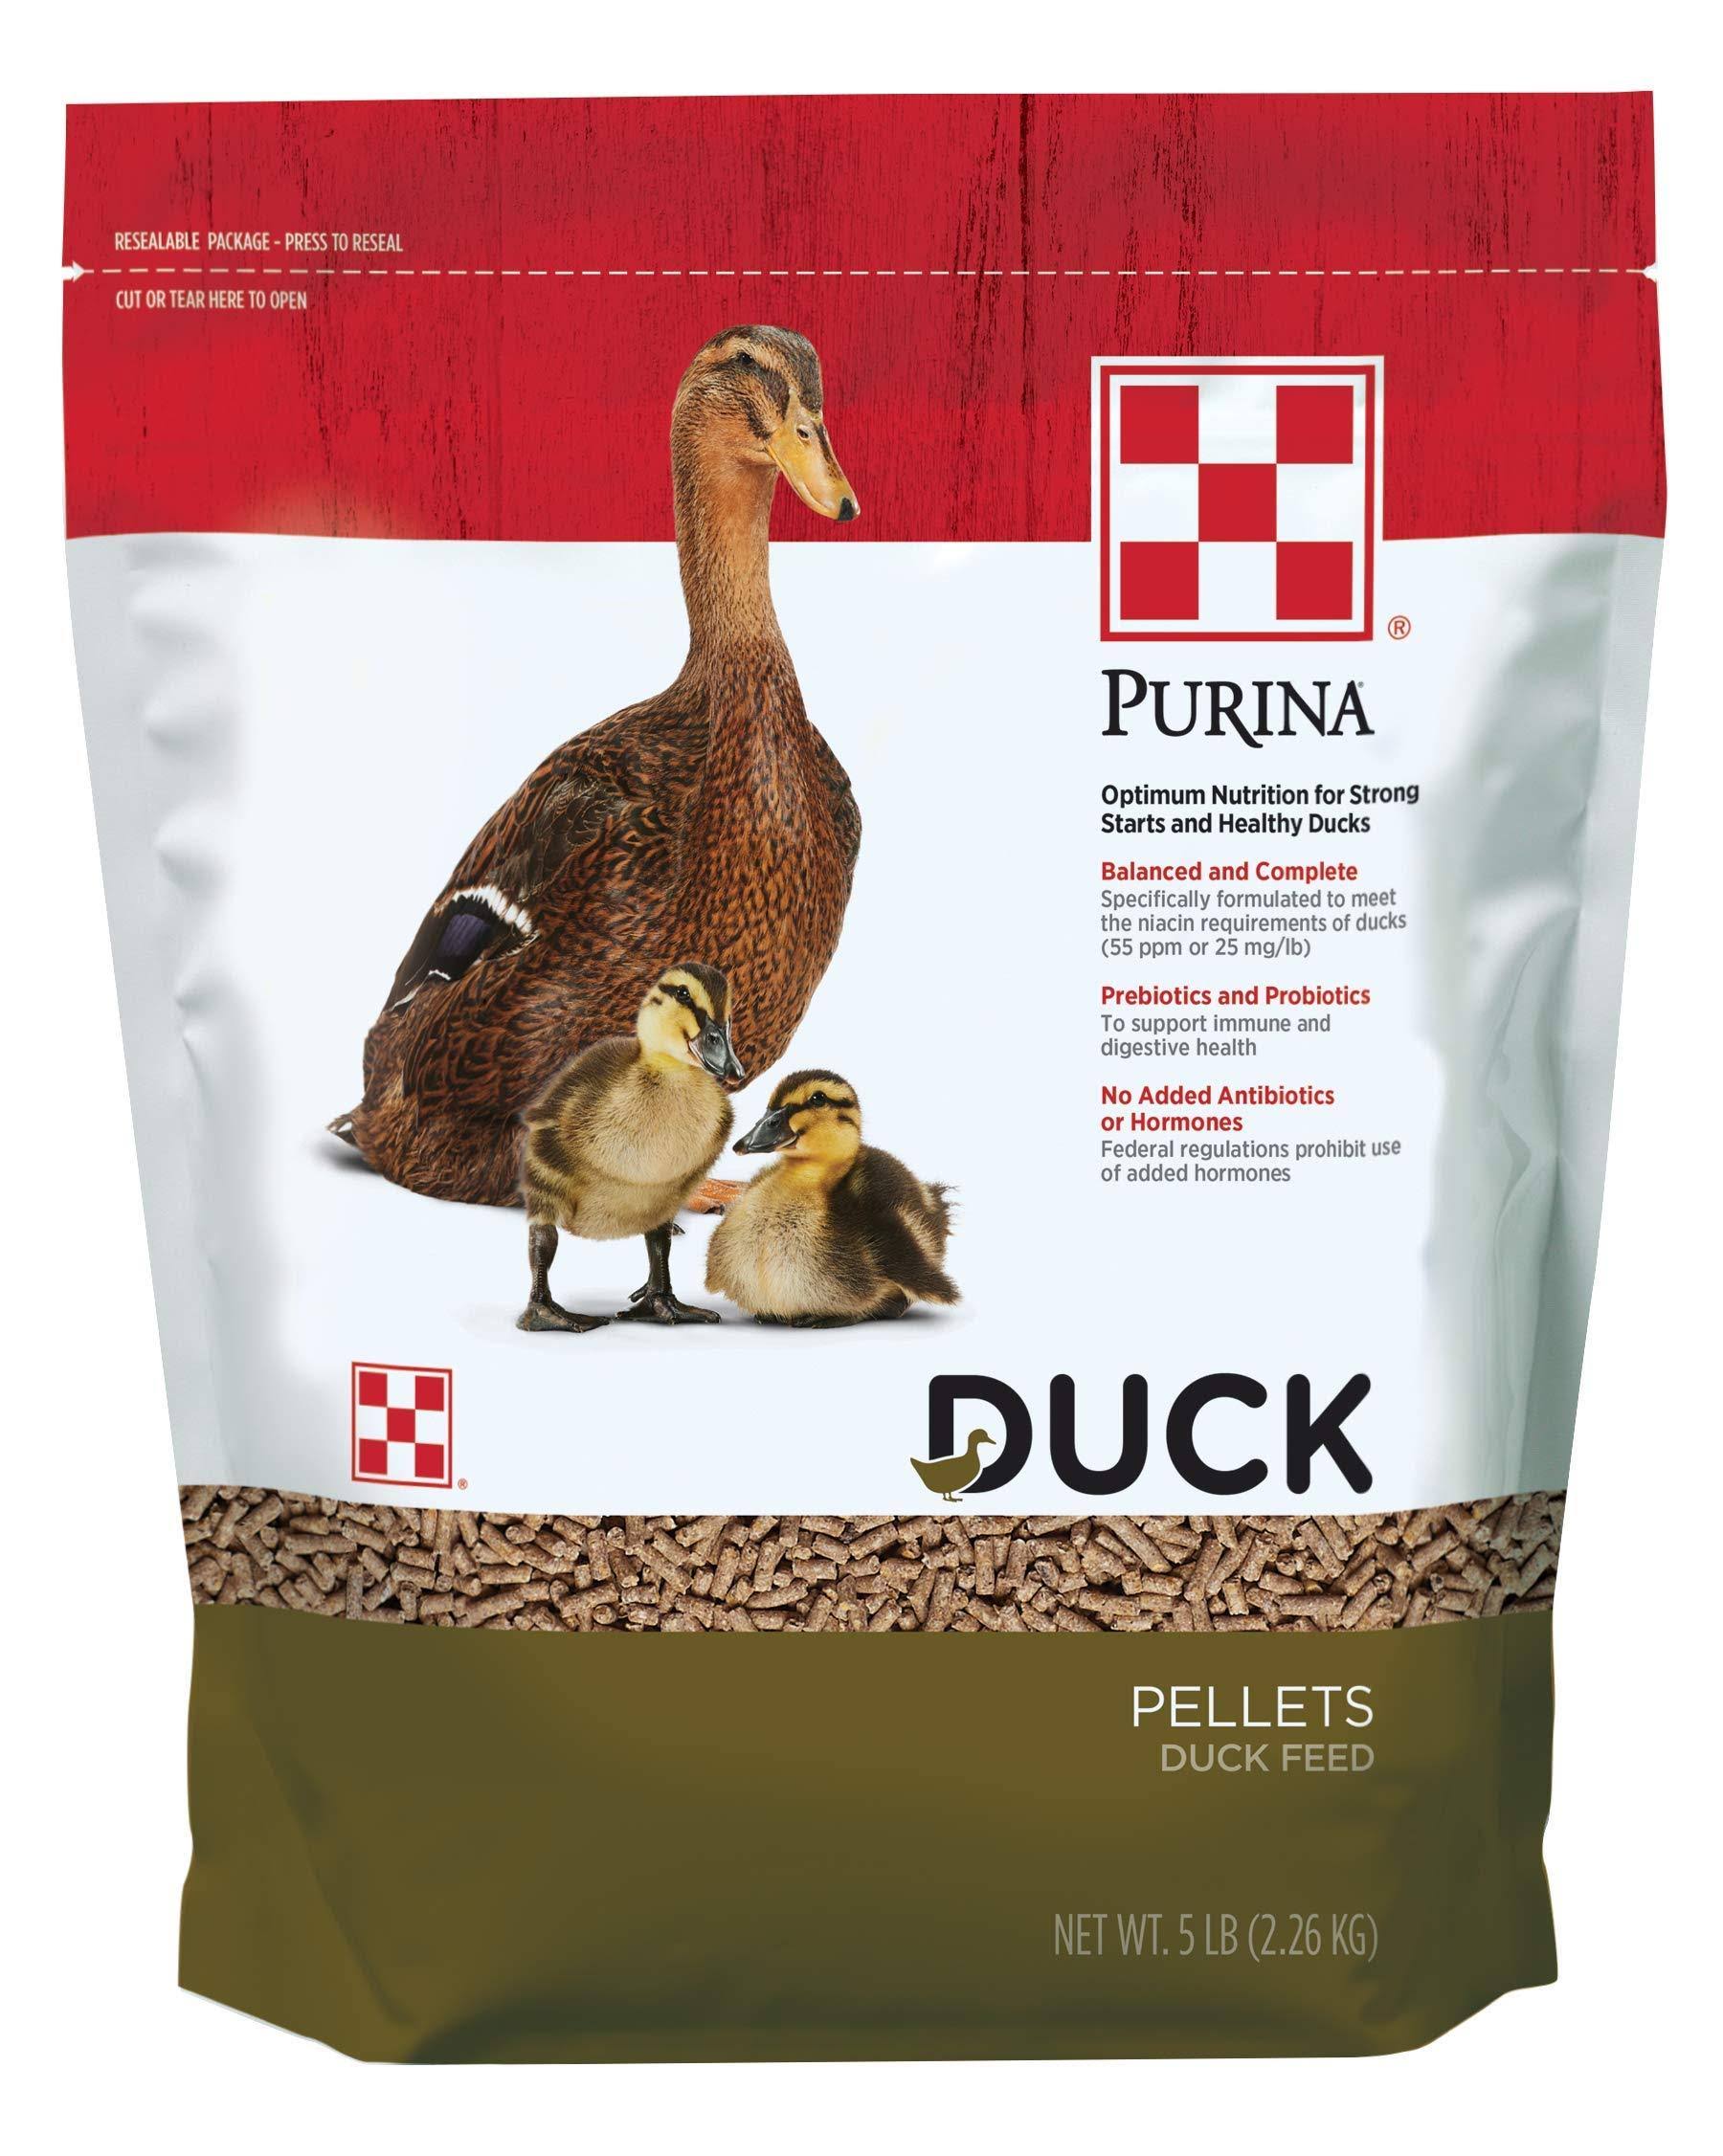 Purina Duck Feed Pellets, 5 lbs.